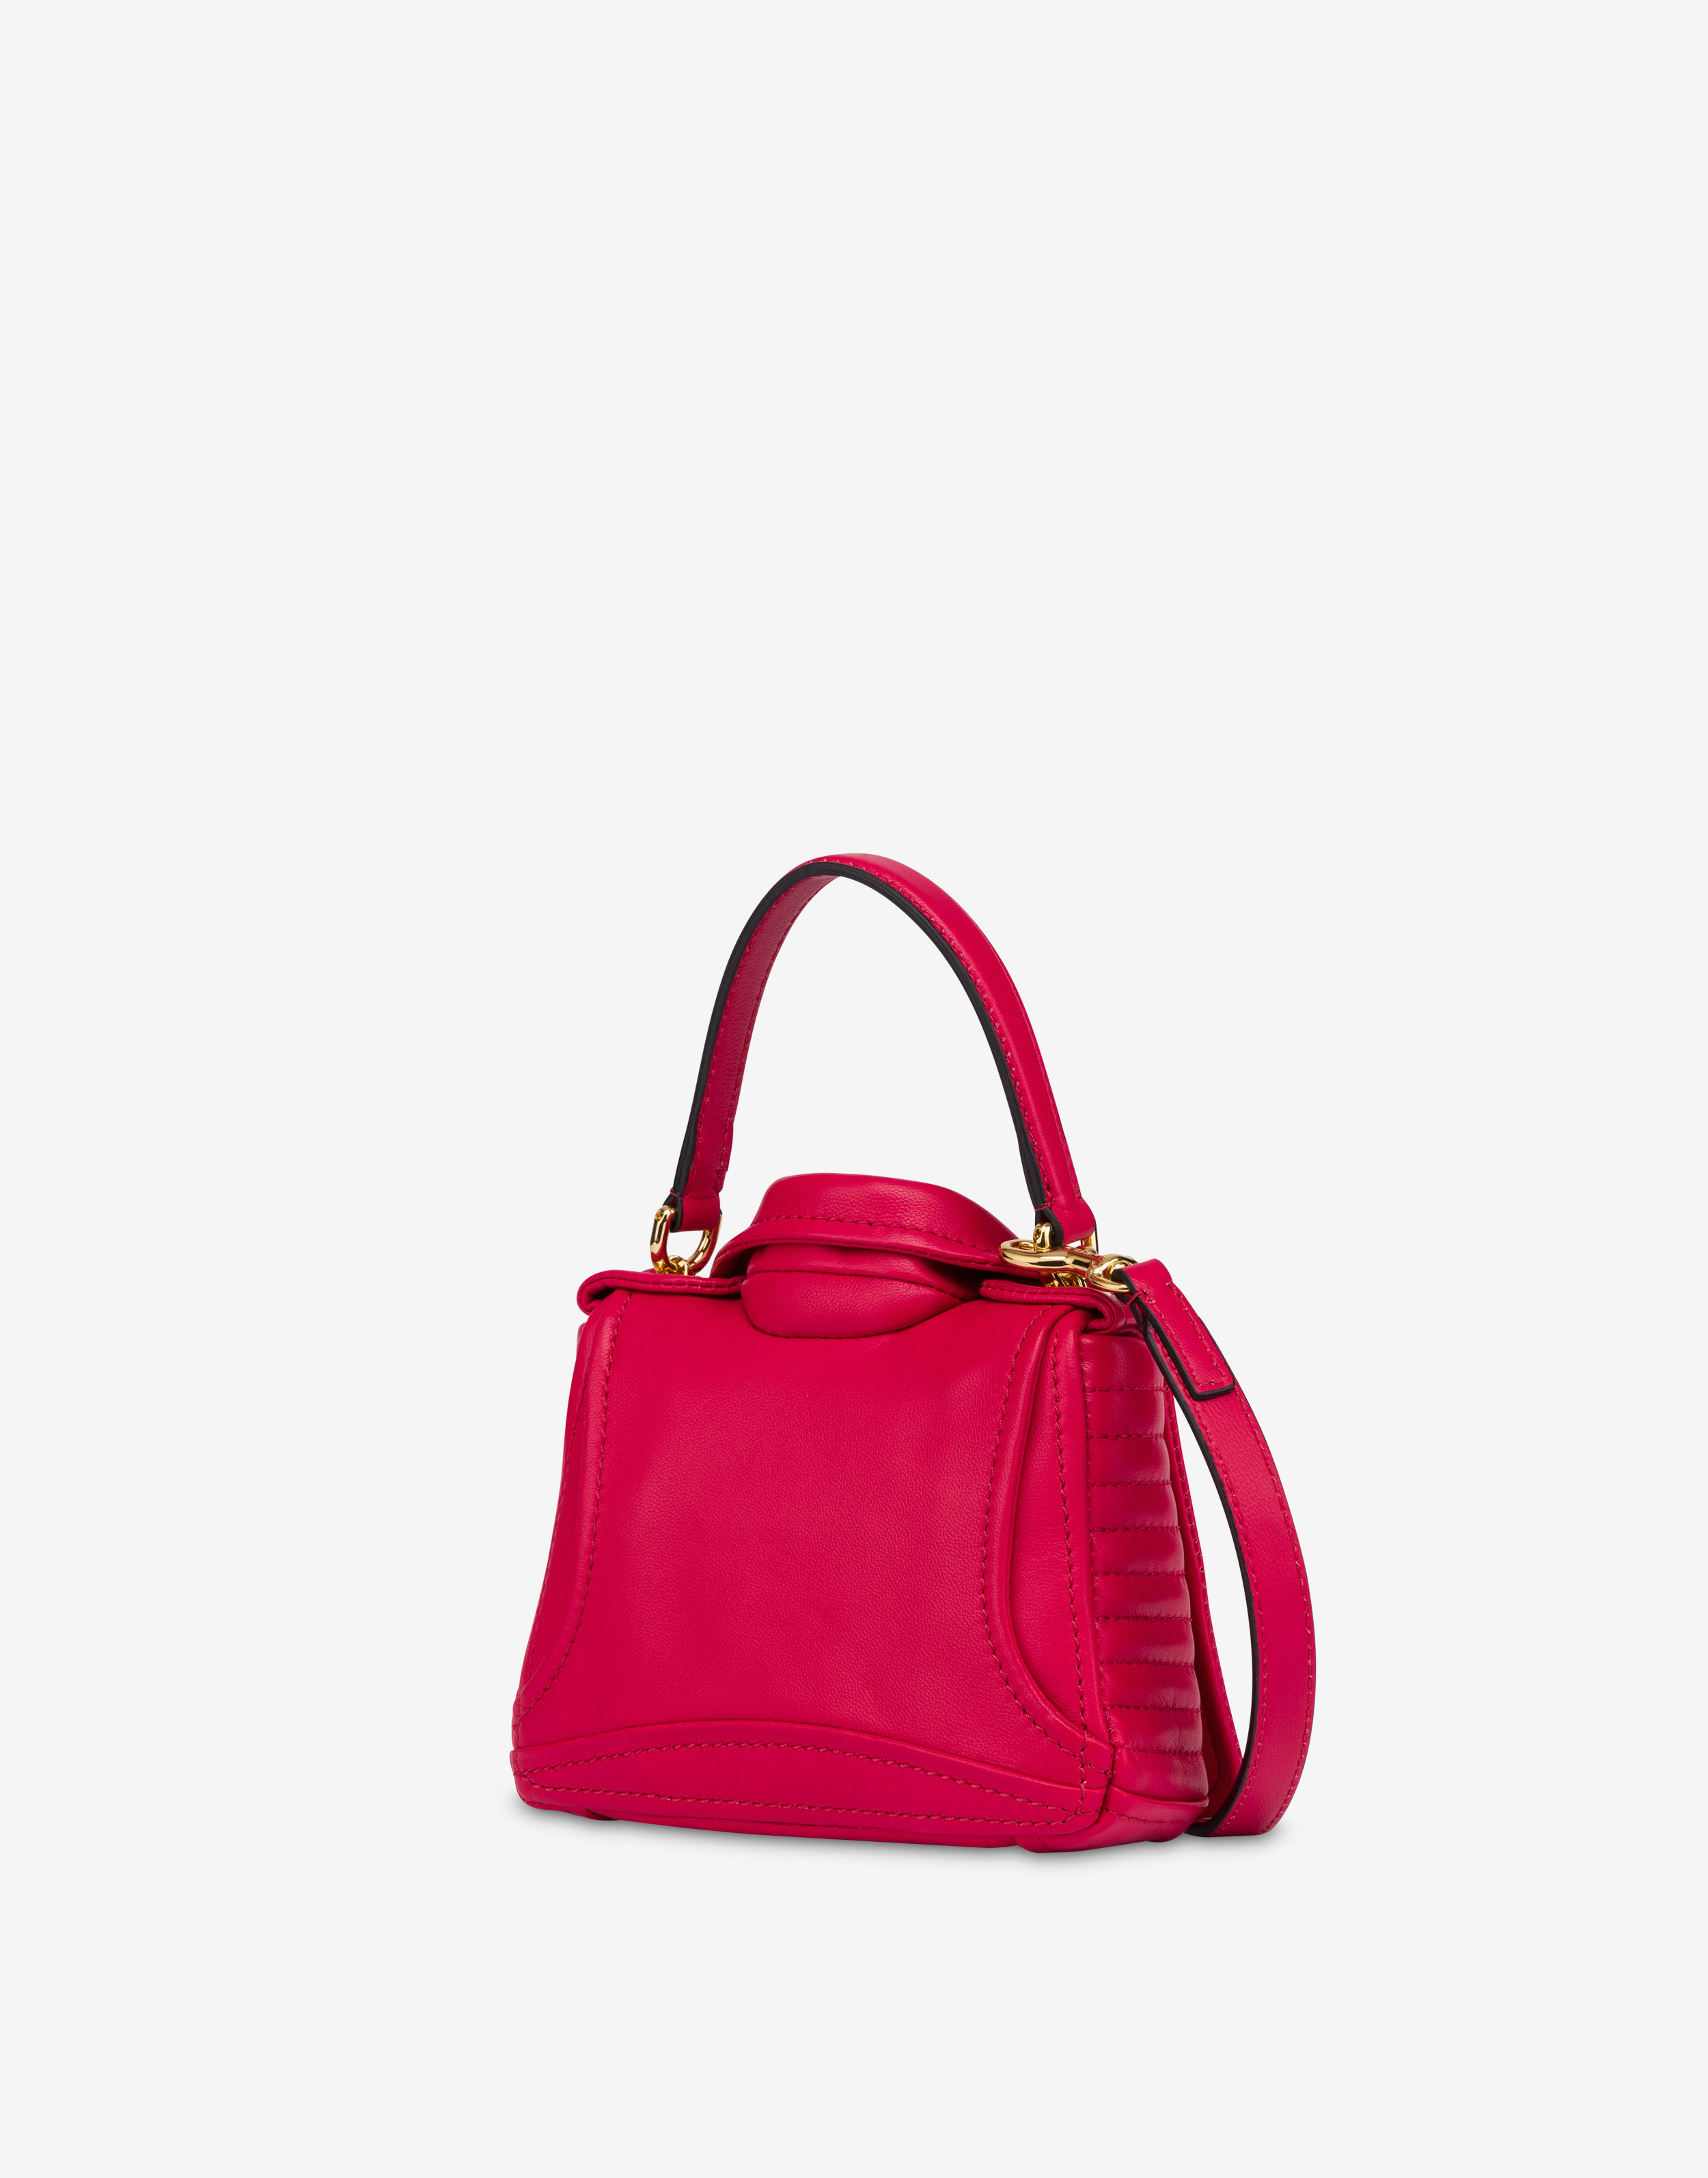 Moschino Bags Women | Moschino Official Store